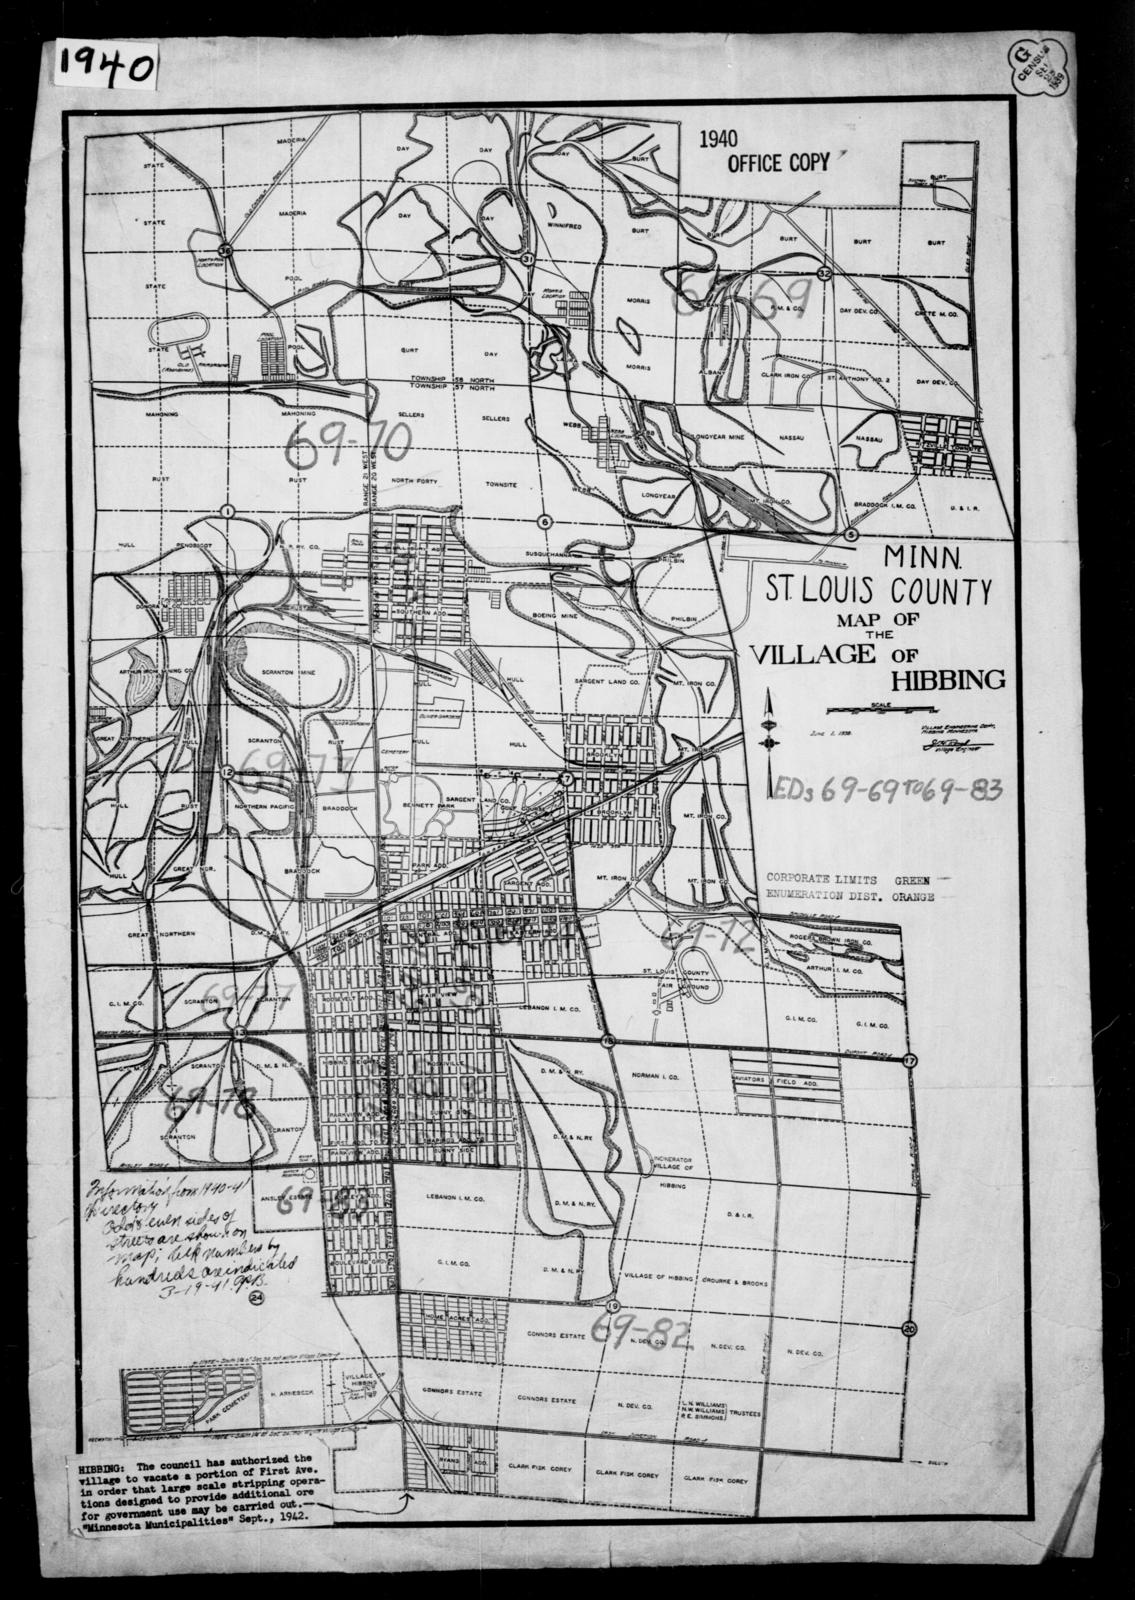 1940 Census Enumeration District Maps - Minnesota - St. Louis County - Hibbing - ED 69-69 - ED ...